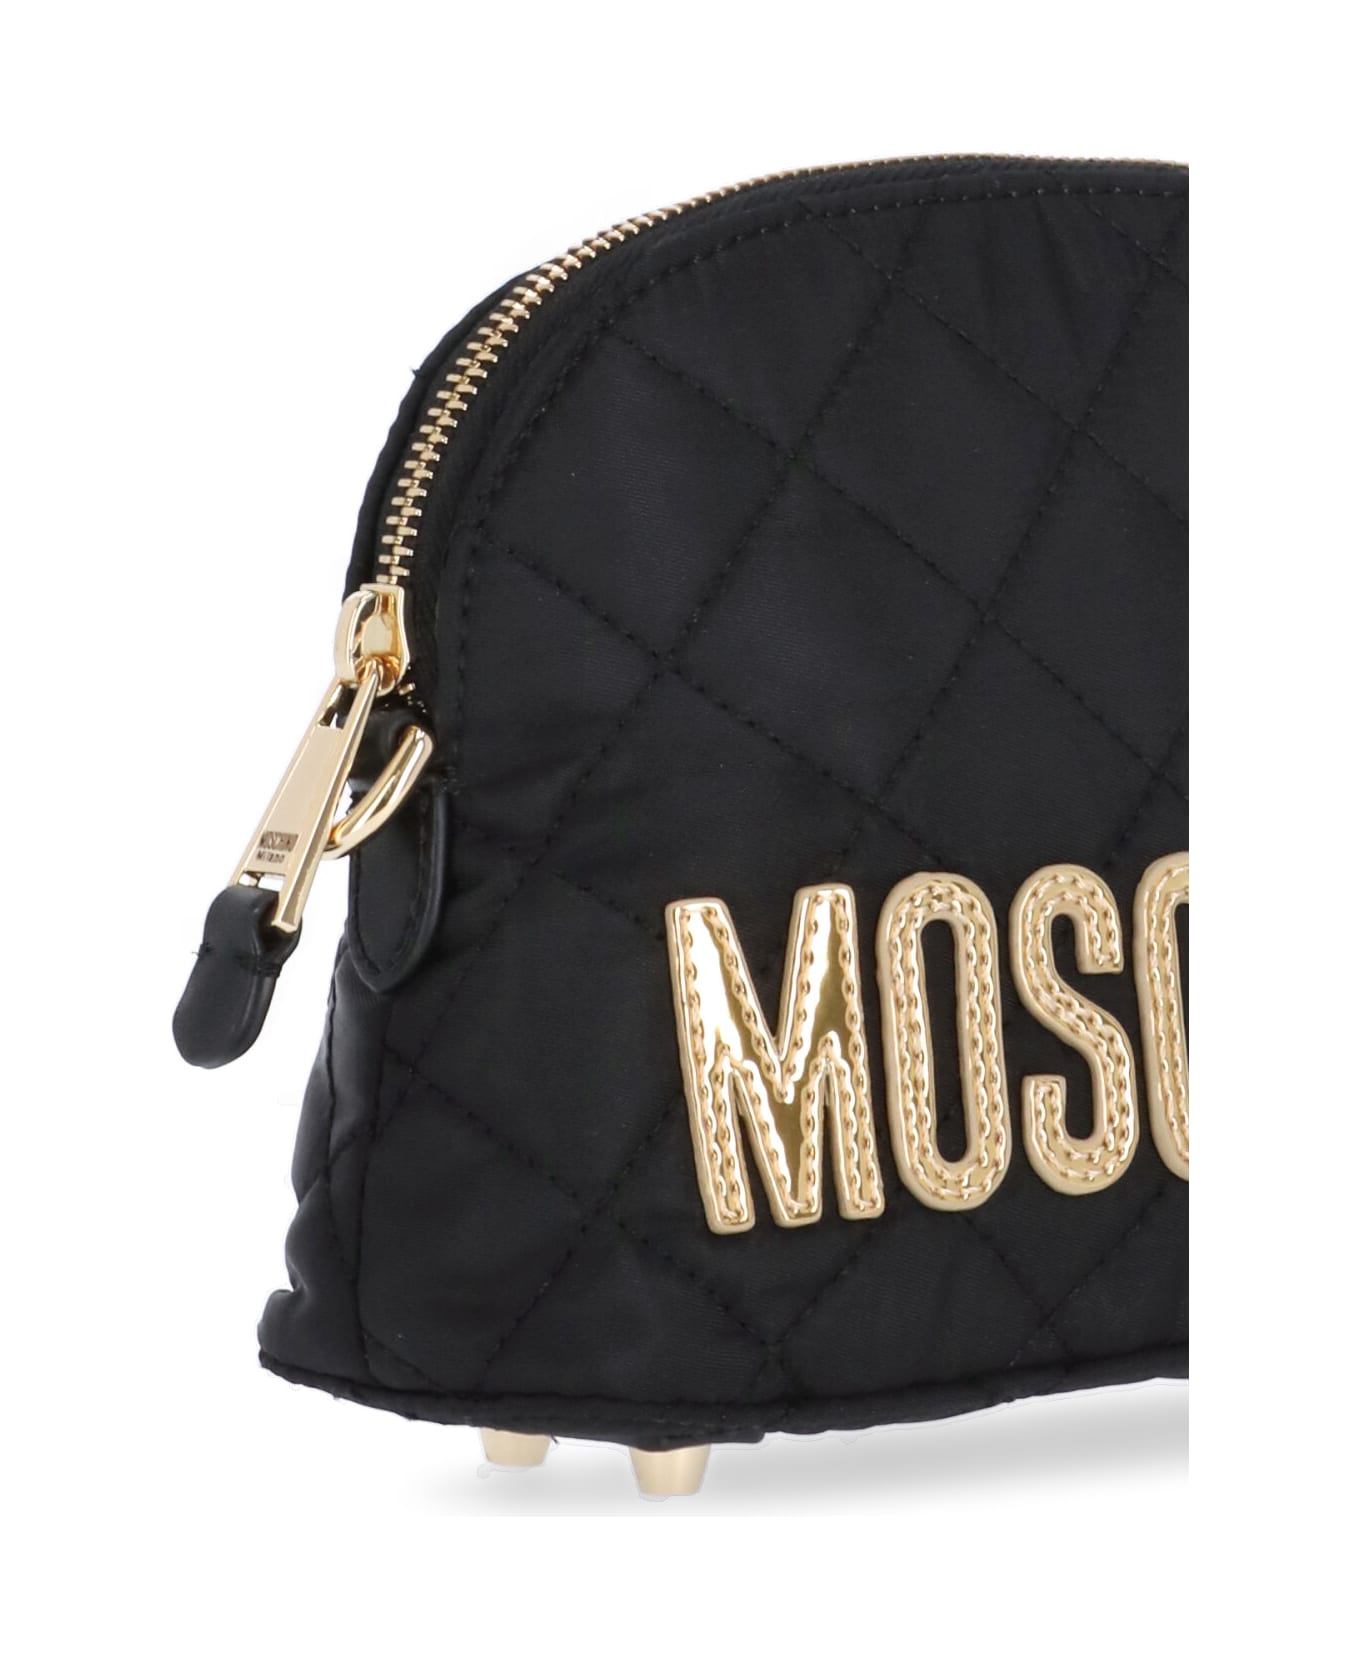 Moschino Logo Crossbody Bag - Black ショルダーバッグ